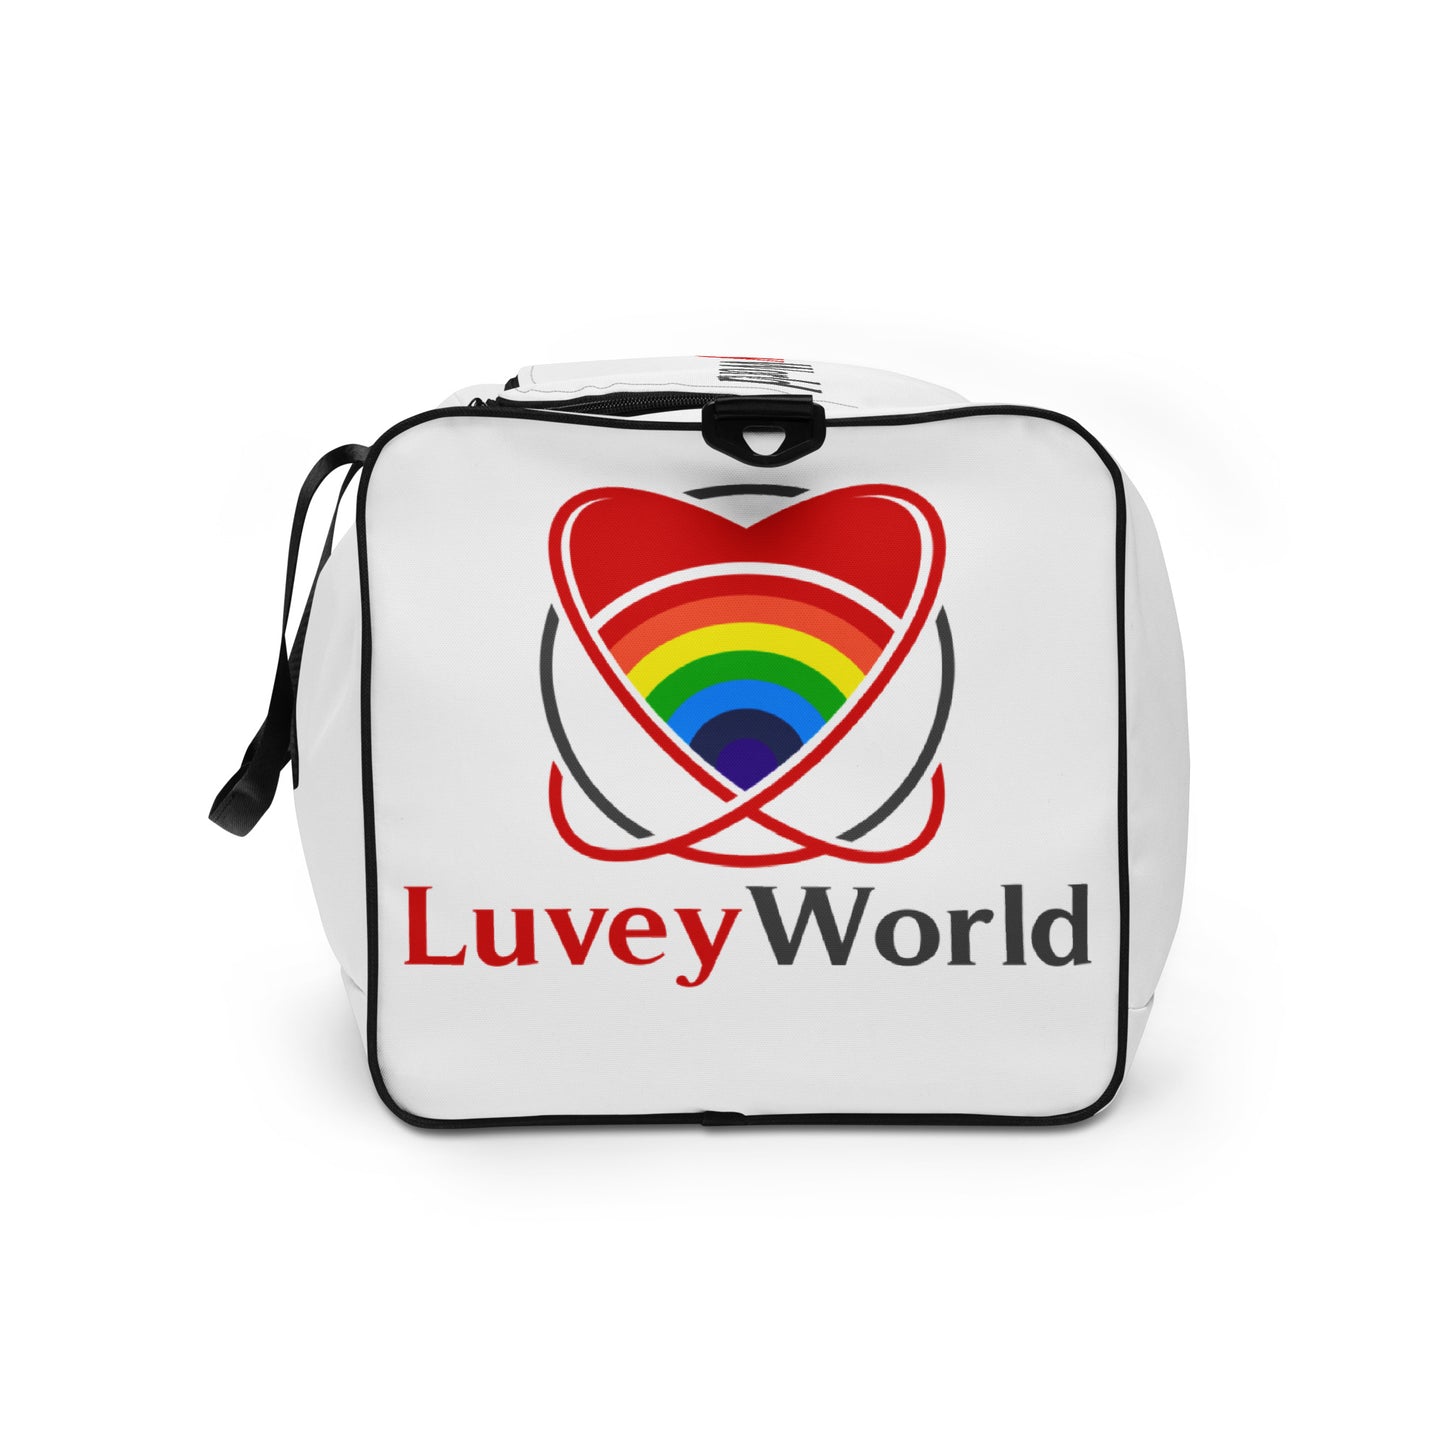 LuveyWorld Duffle bag